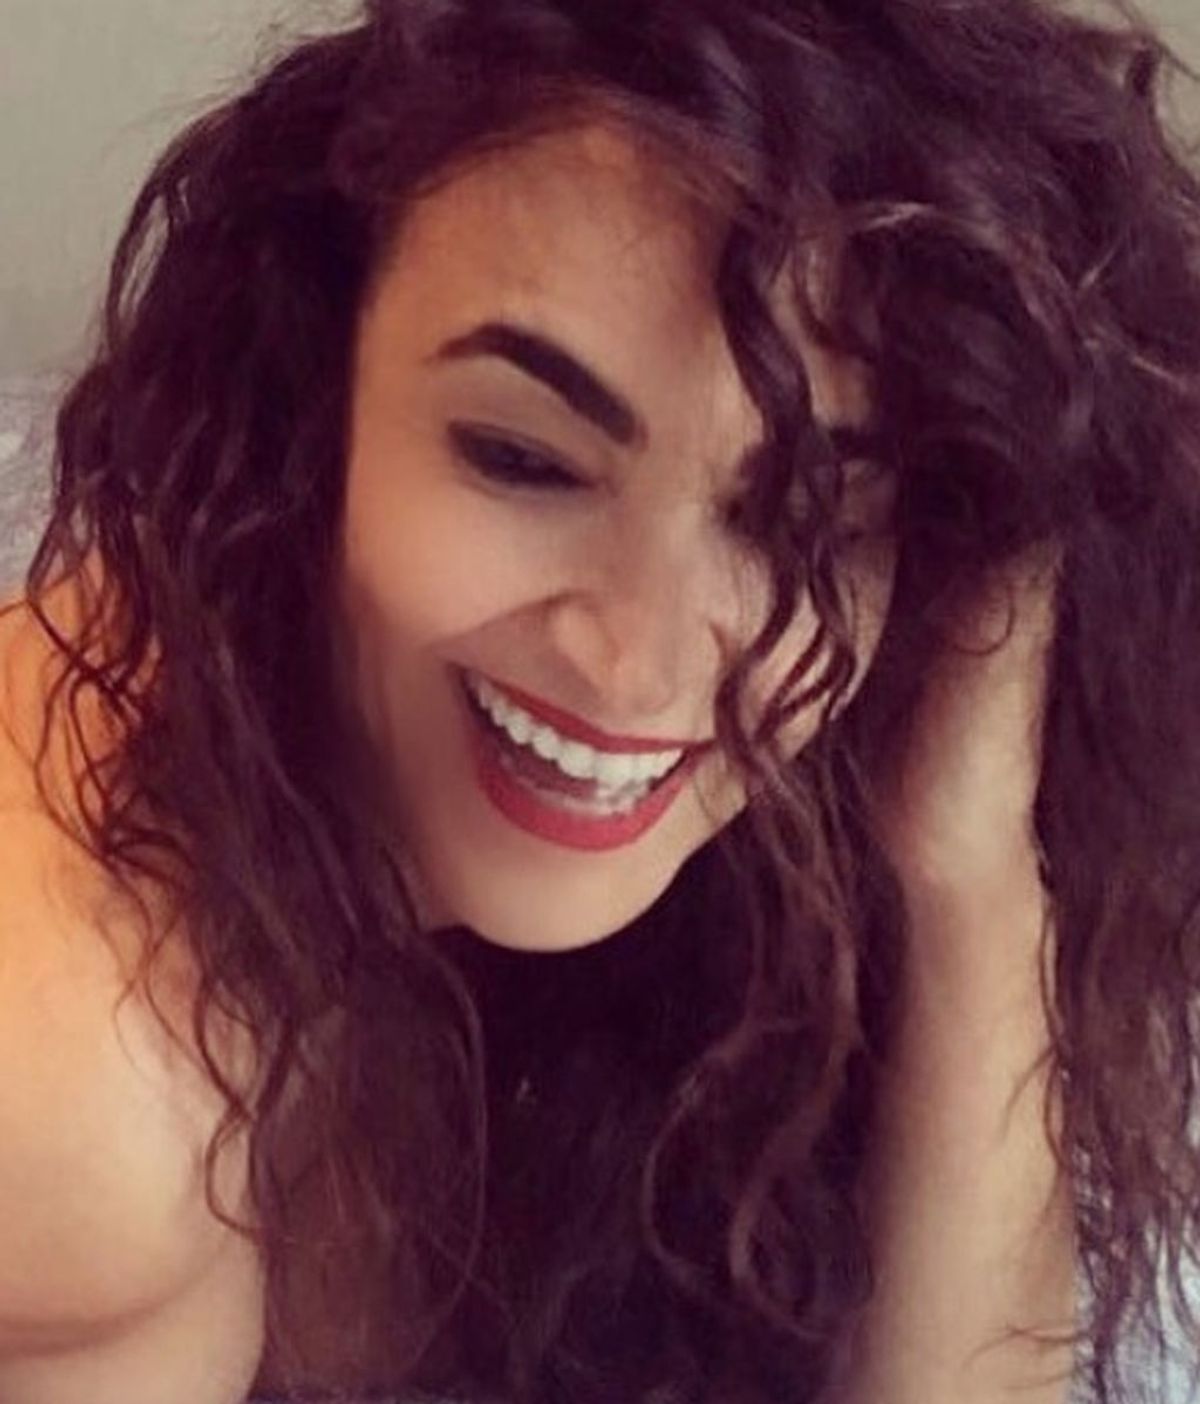 Cristina Rodríguez 'Cámbiame' sorprende en Instagram con un desnudo integral